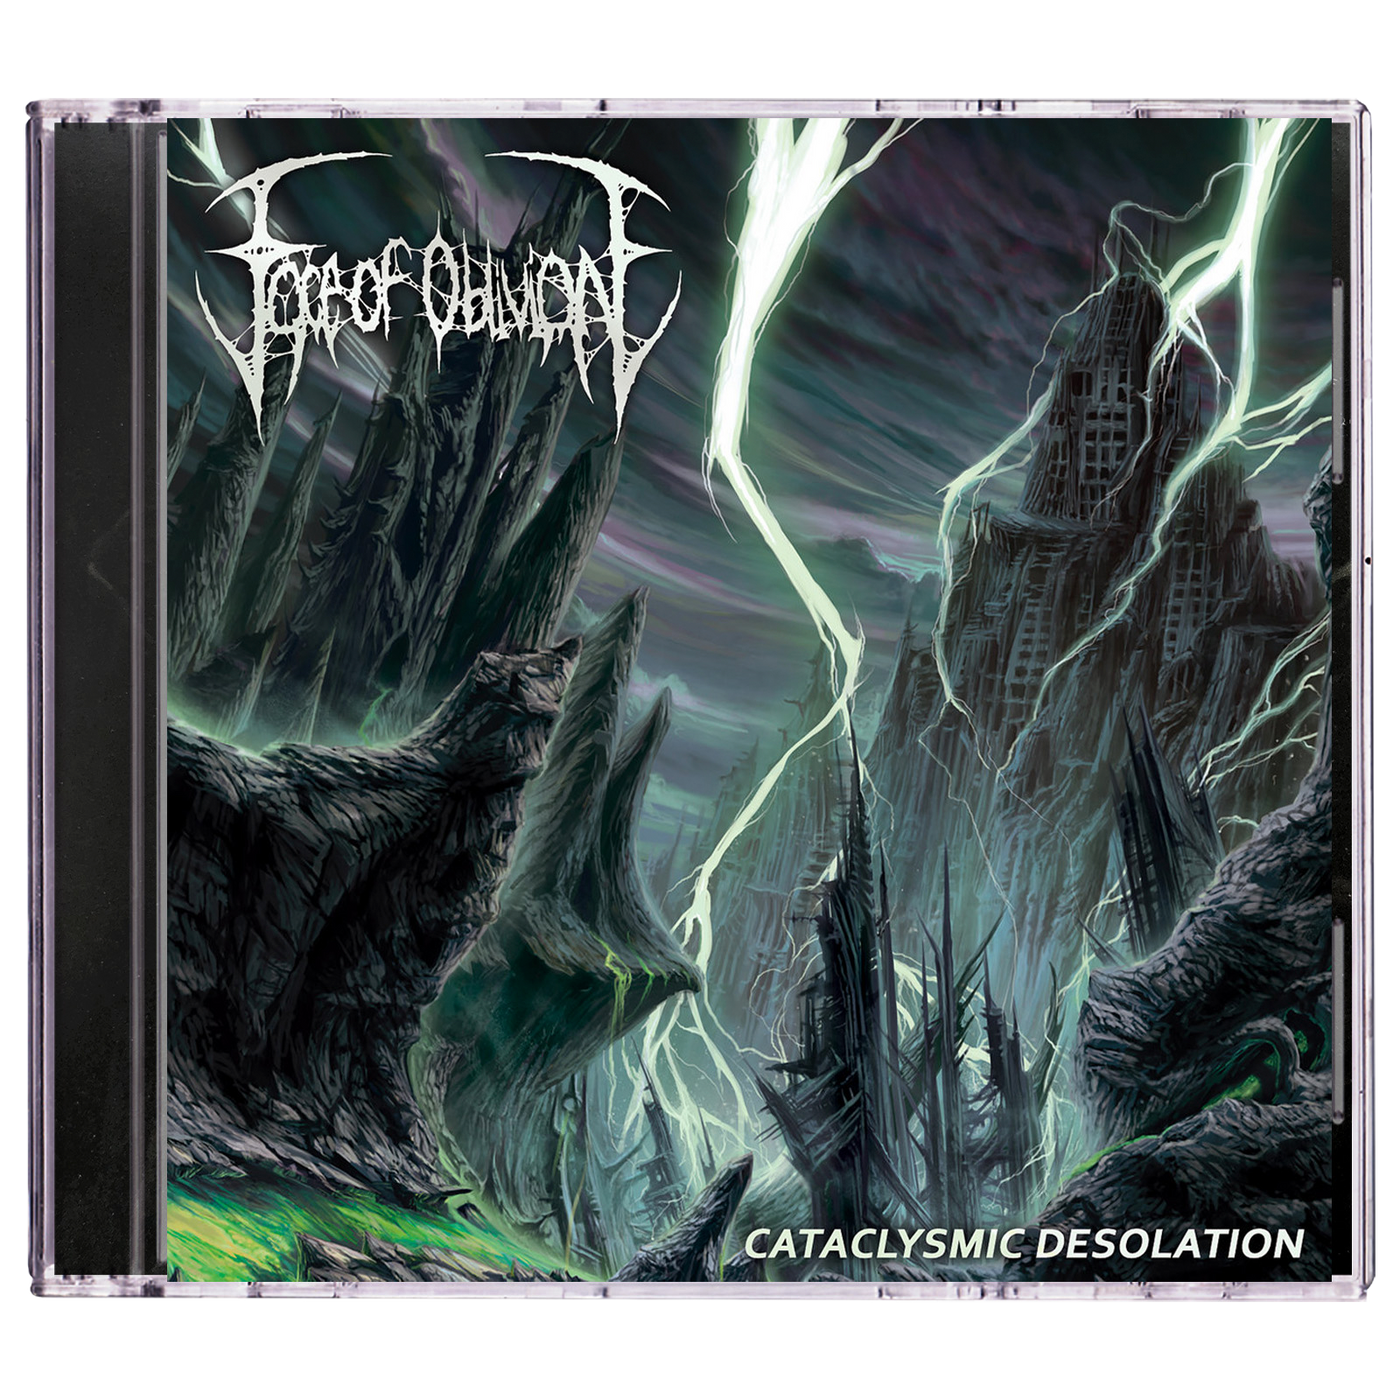 Face Of Oblivion 'Cataclysmic Desolation' CD